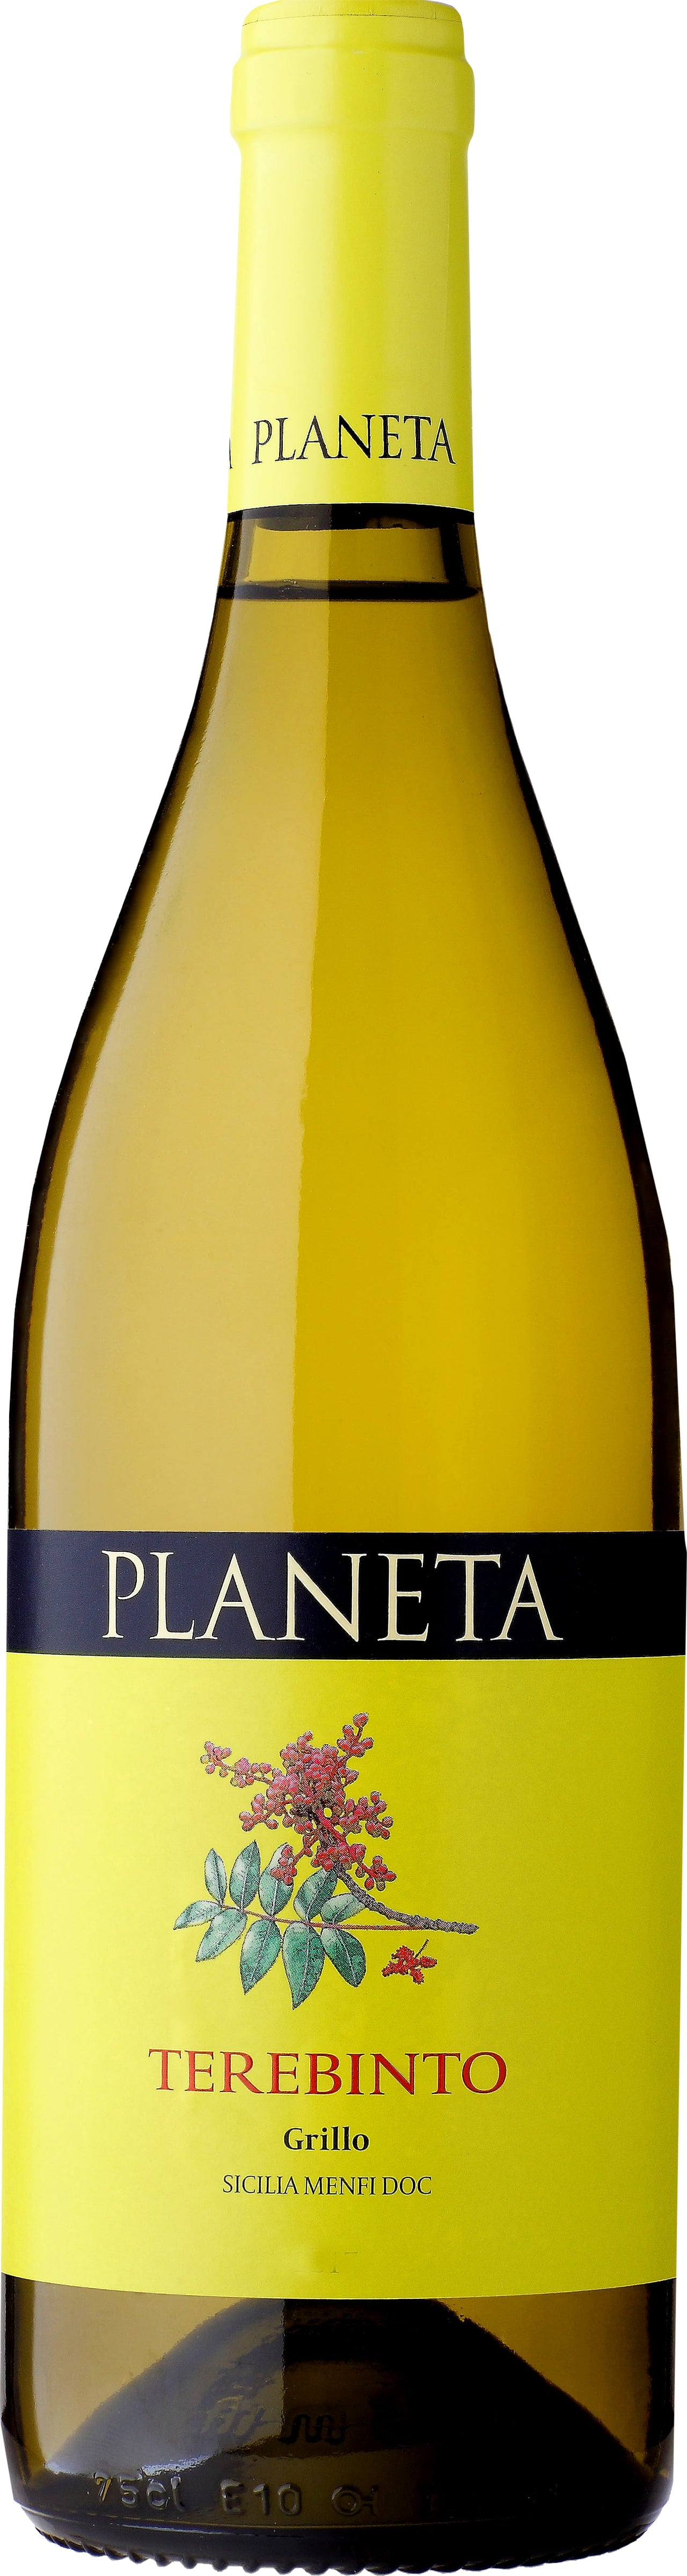 Planeta Terebinto Grillo 2022 75cl - Buy Planeta Wines from GREAT WINES DIRECT wine shop